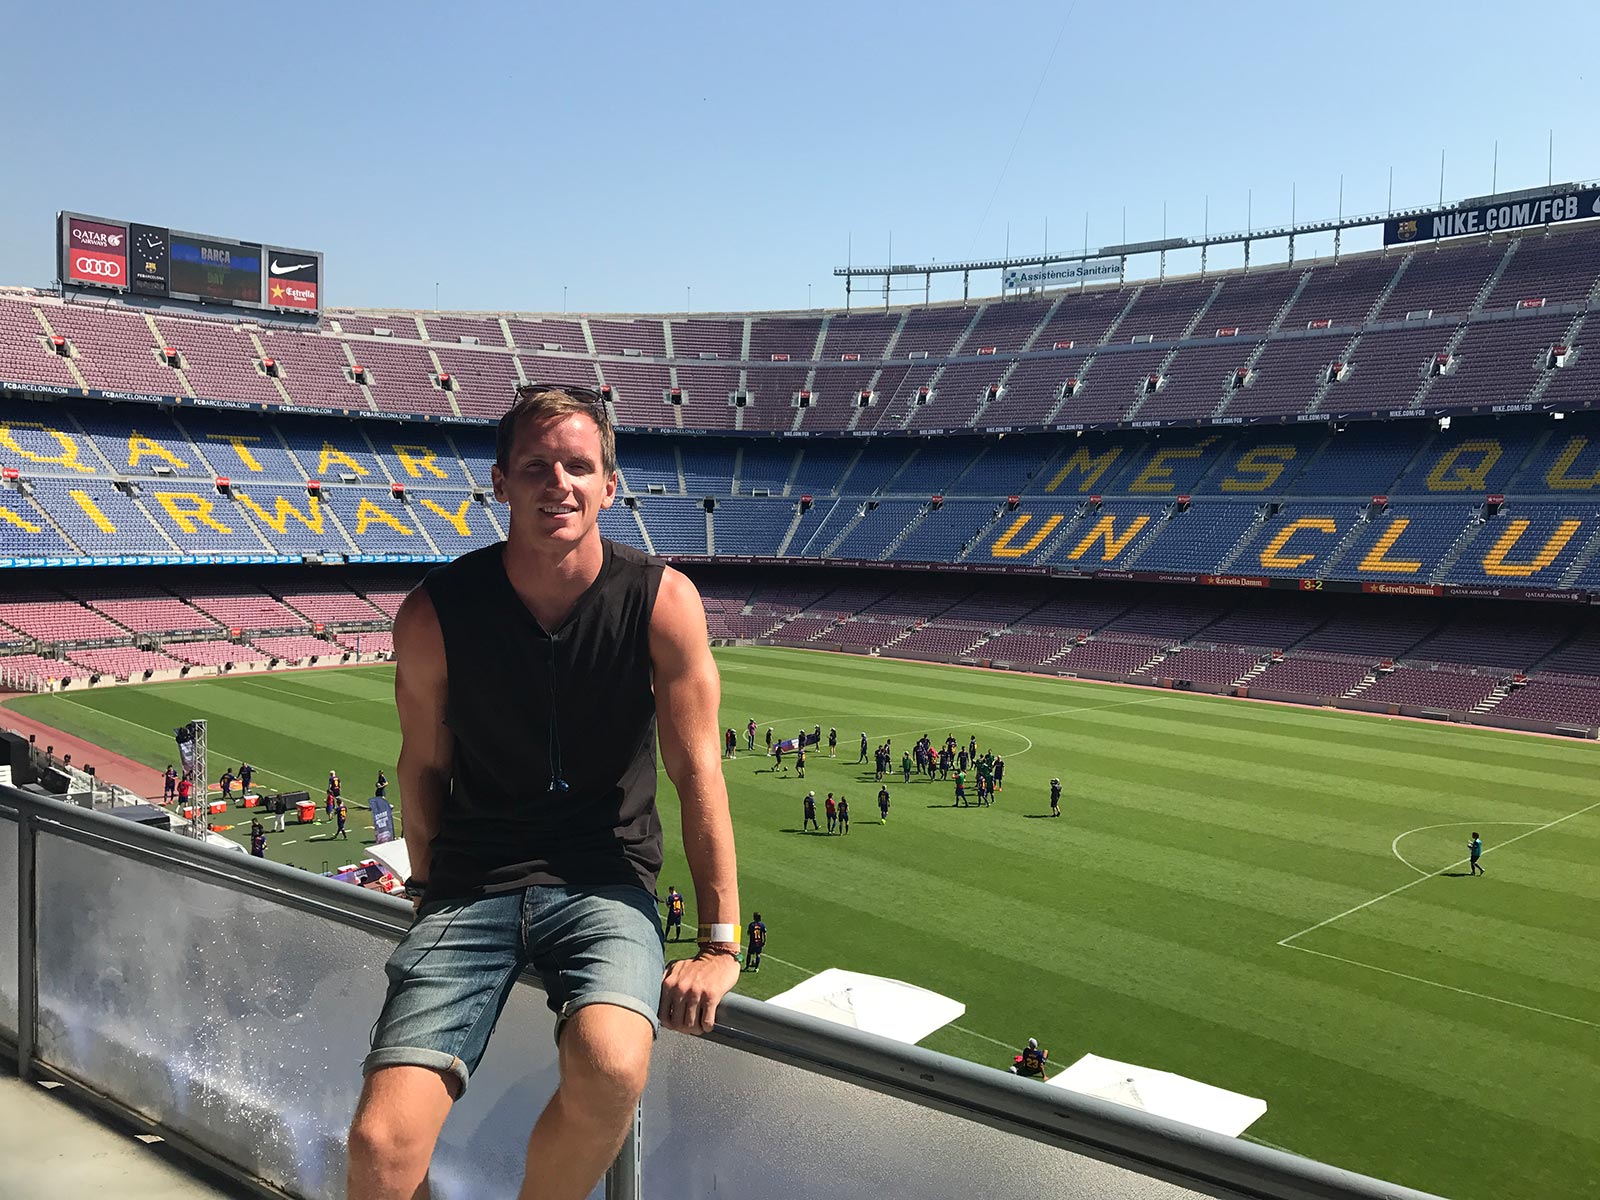 David Simpson in Camp Nou stadium in Barcelona, Spain. Andorra, Barcelona & Malta